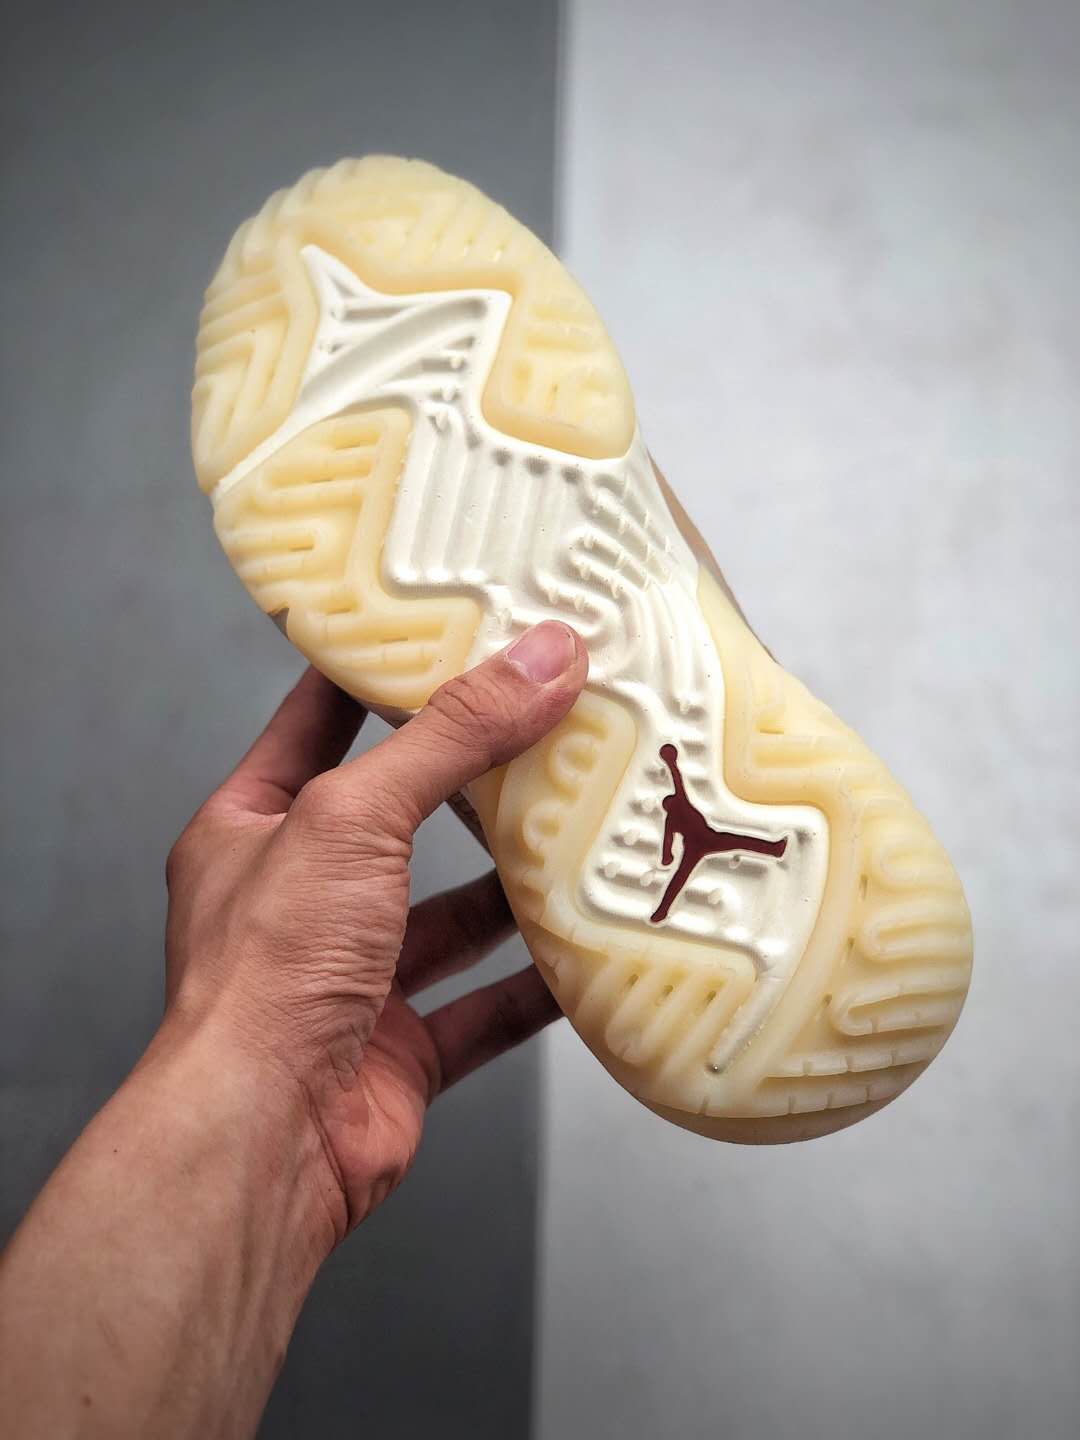 Nike Jordan Delta SP 'Vachetta Tan' CD6109-200 - Stylish Sneakers for Ultimate Comfort